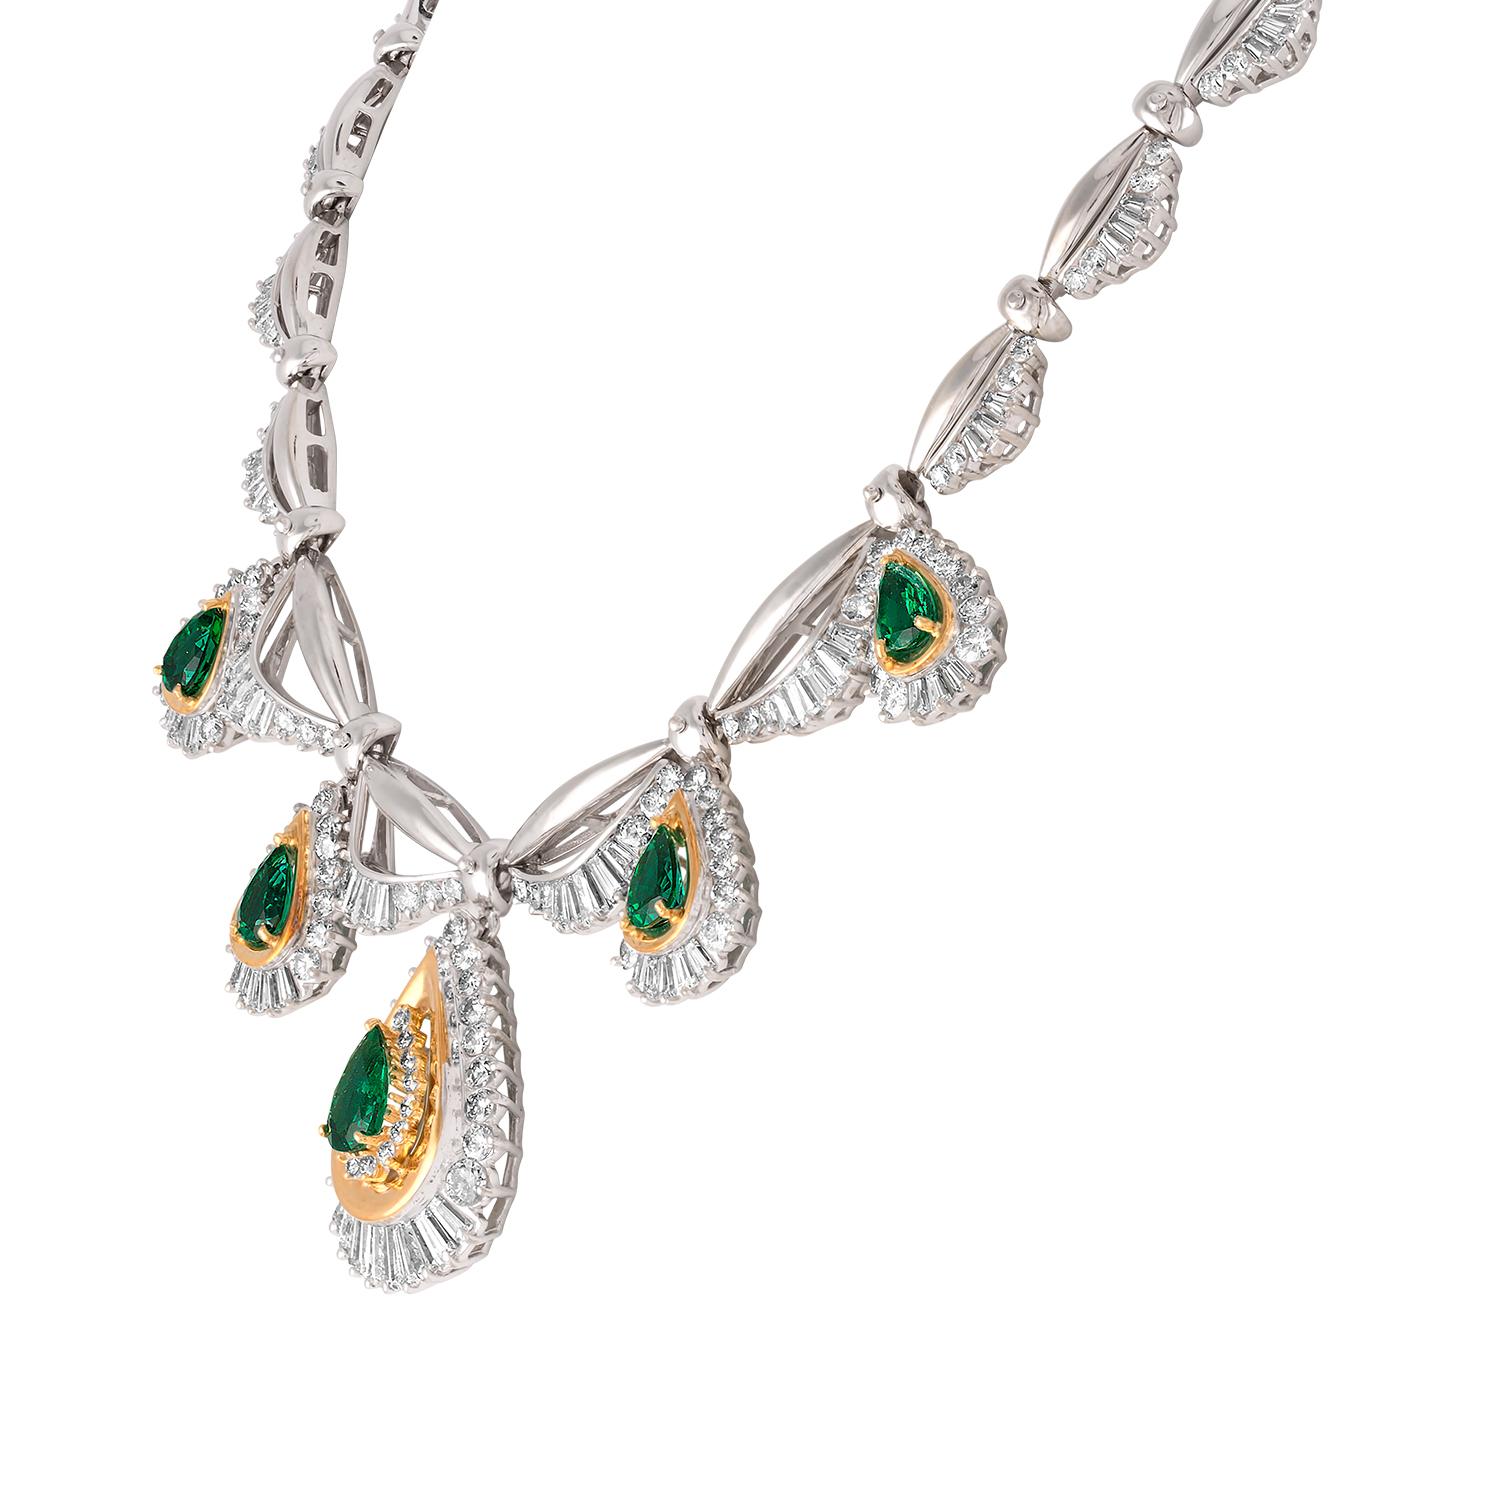 Round Cut 20.00 Carat Diamonds and 12.00 Carat Zambian Emeralds Necklace Earrings Gold Set